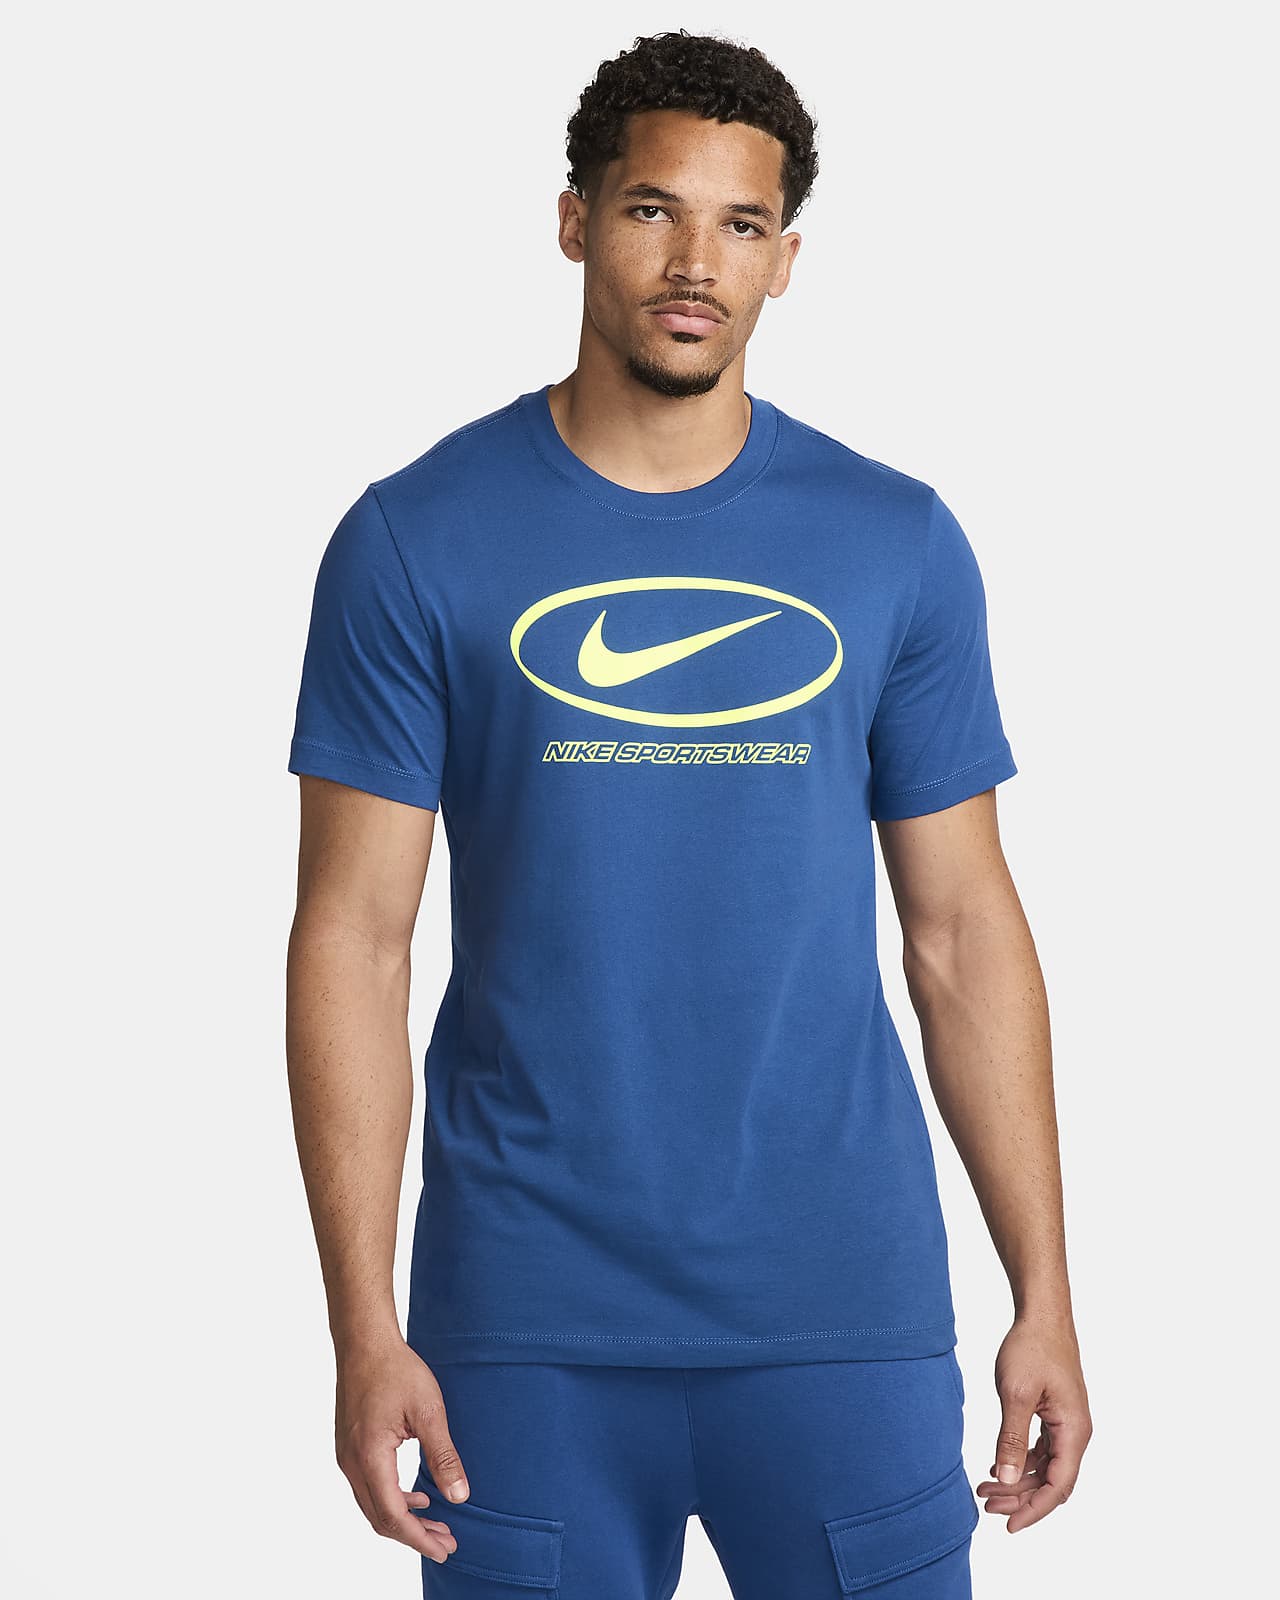 Nike Sportswear Samarreta estampada - Home